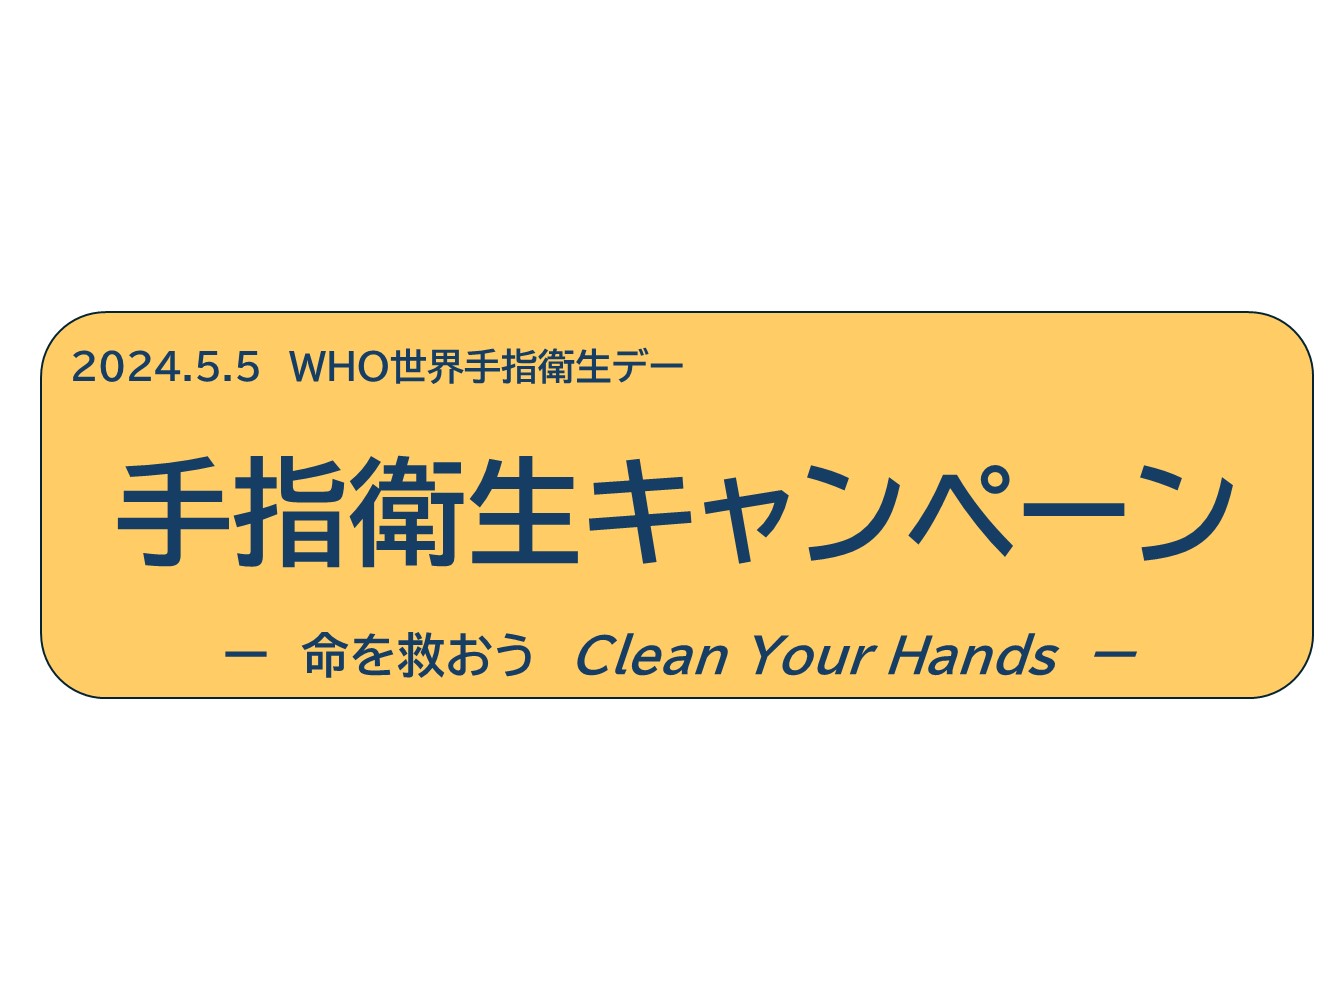 【ICT】手指衛生キャンペーン